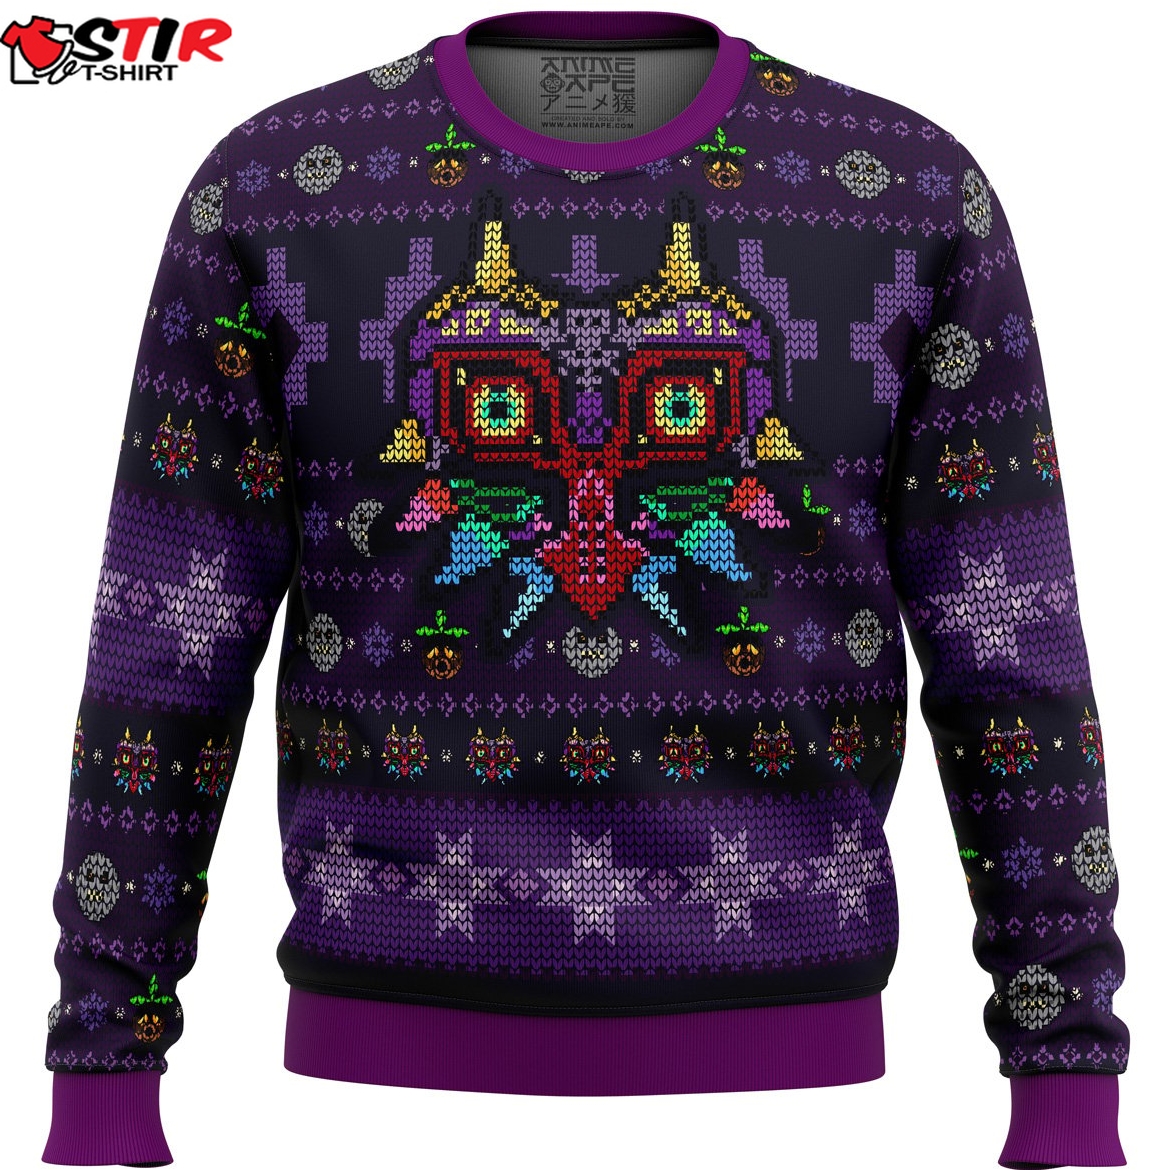 Majoras Mask Seamless Pattern Legend Of Zelda Ugly Christmas Sweater Stirtshirt